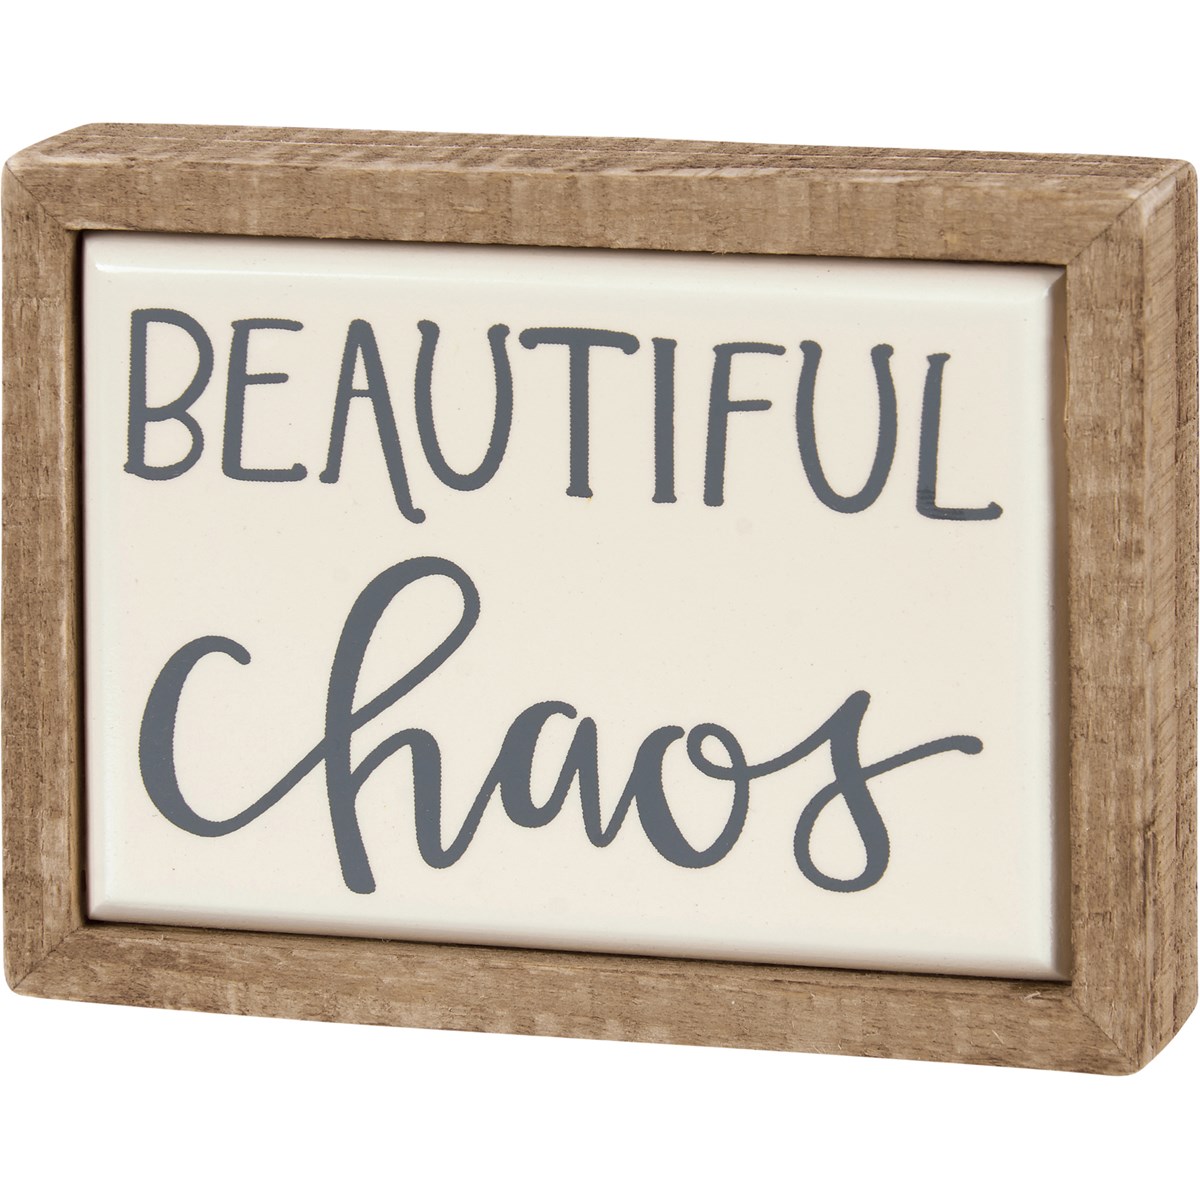 Beautiful Chaos Box Sign Mini - Wood